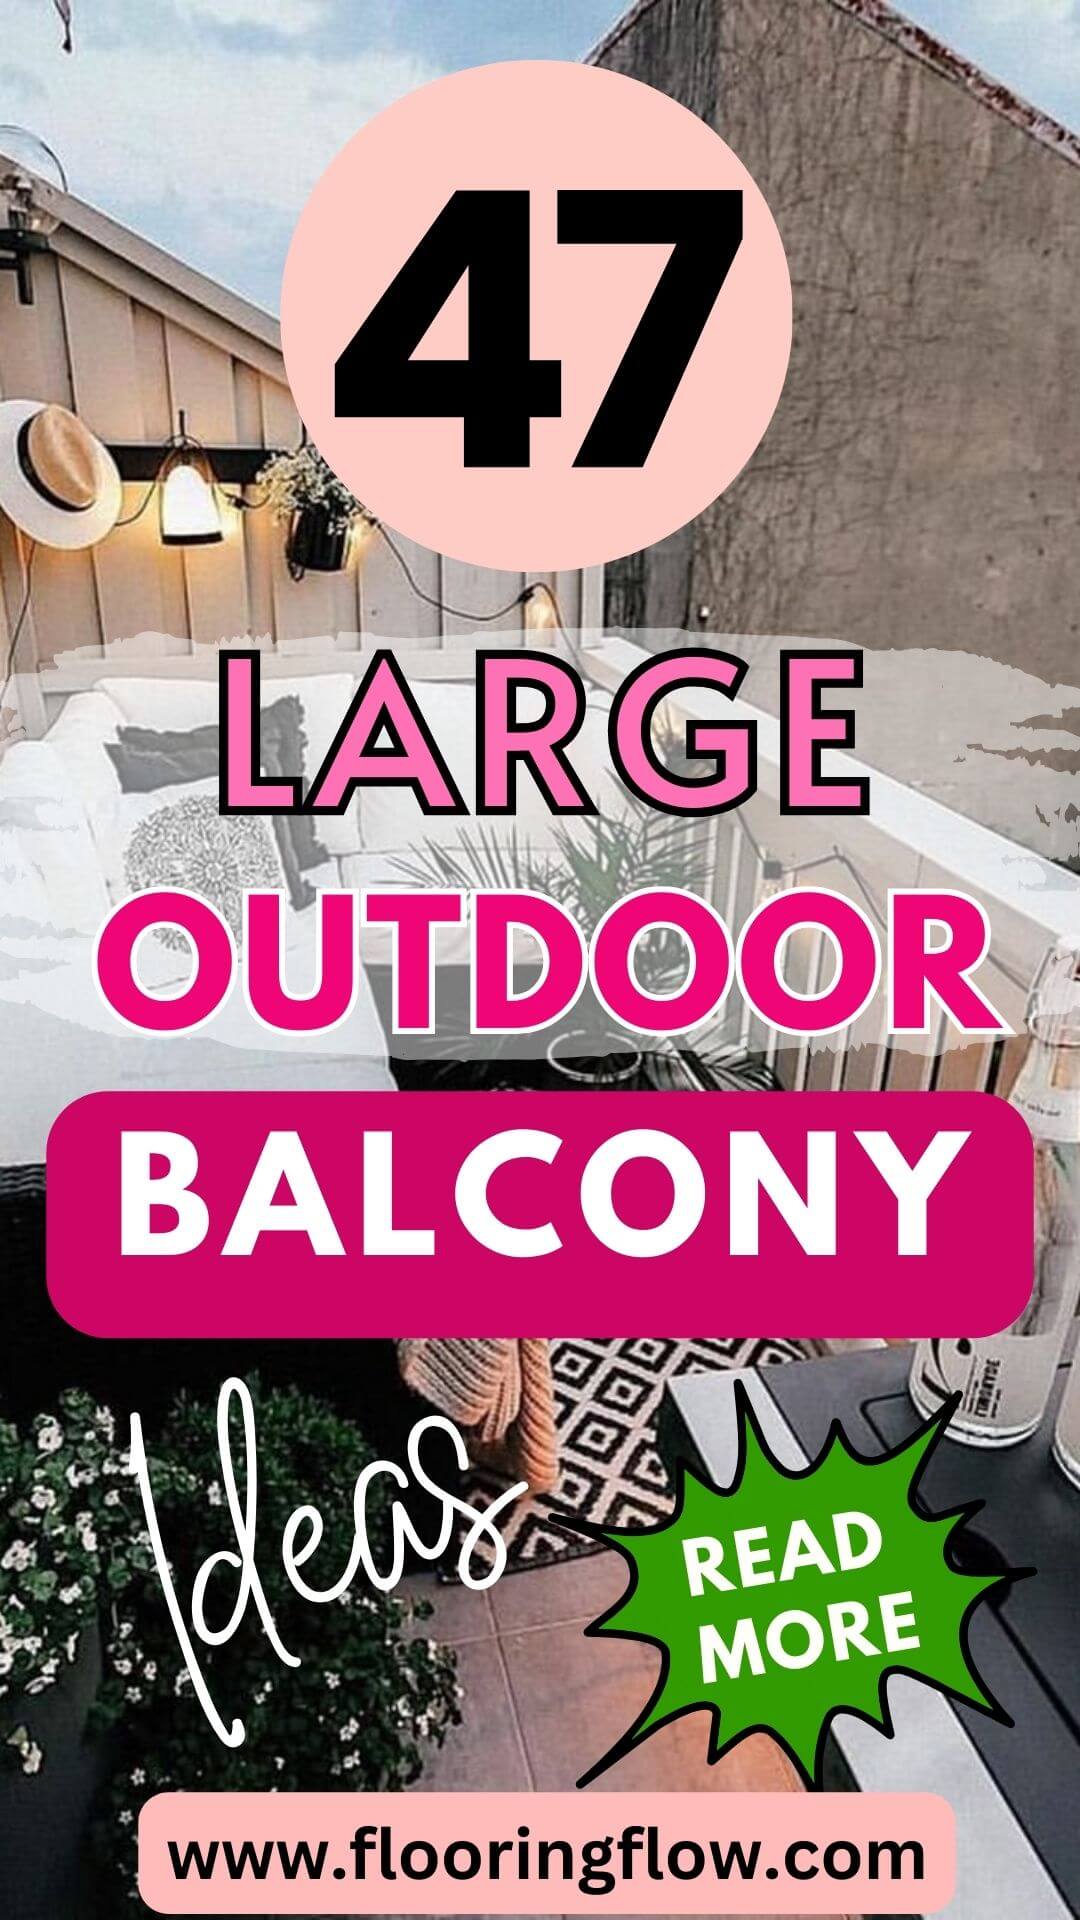 Large outdoor balcony ideas